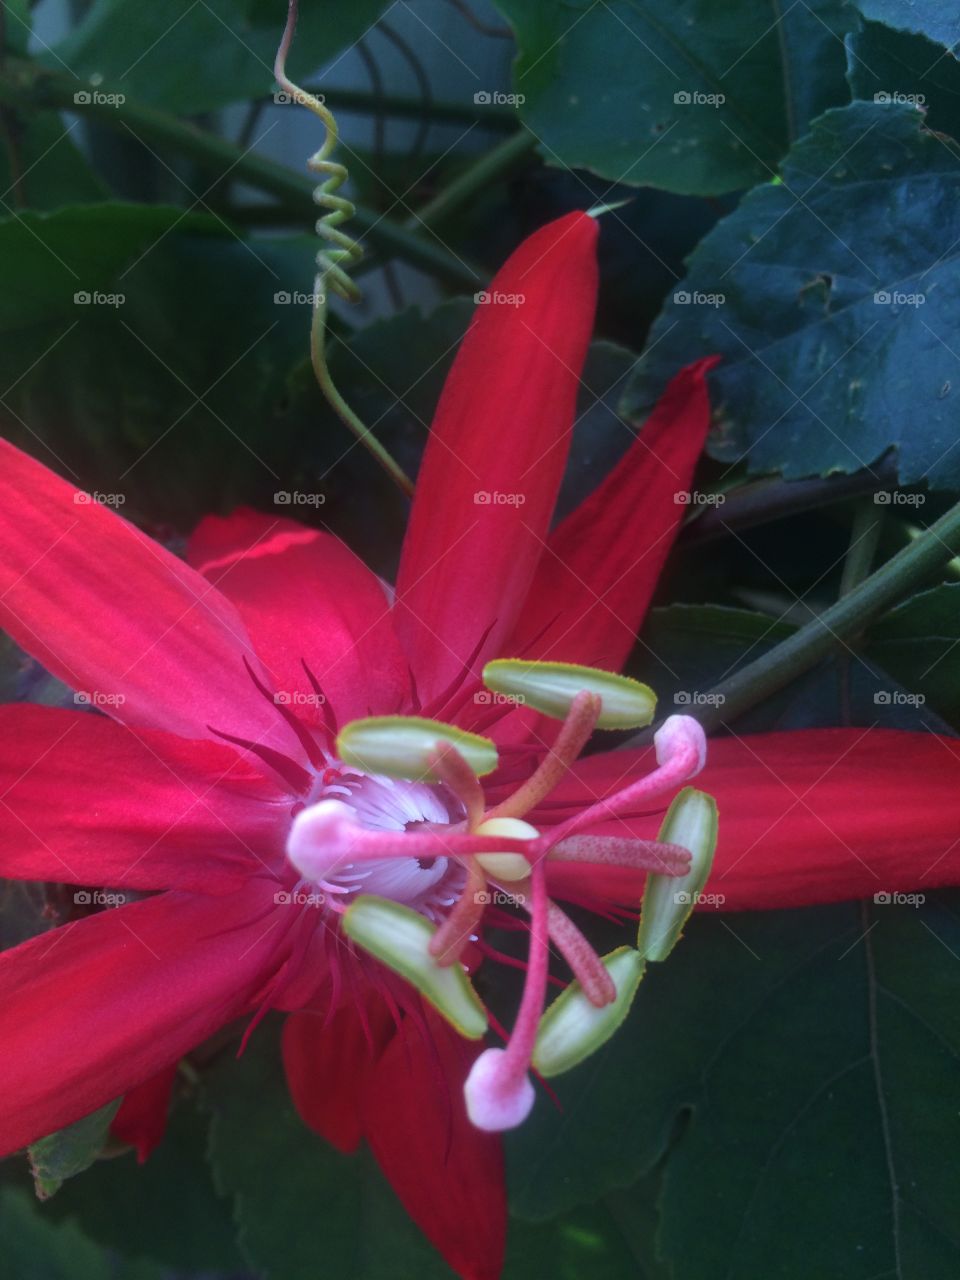 Scarlet Passion flower
